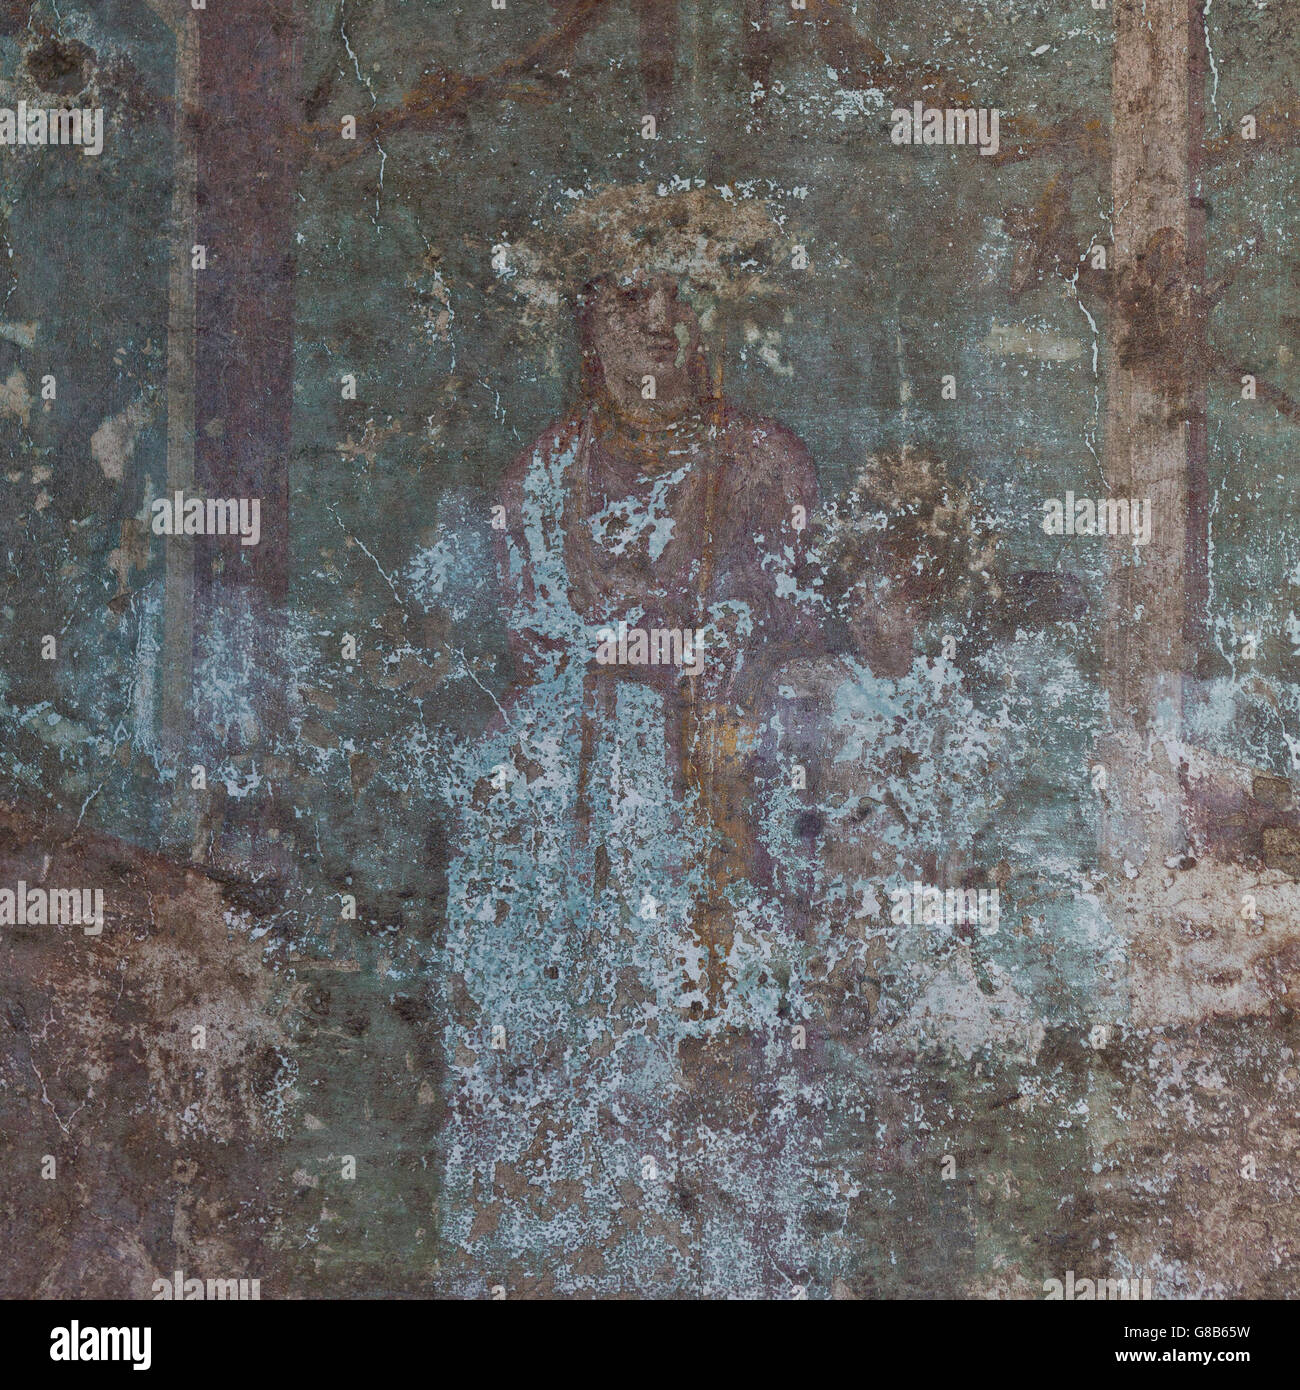 Frescoe from ruins of Pompeii, Italy Stock Photo